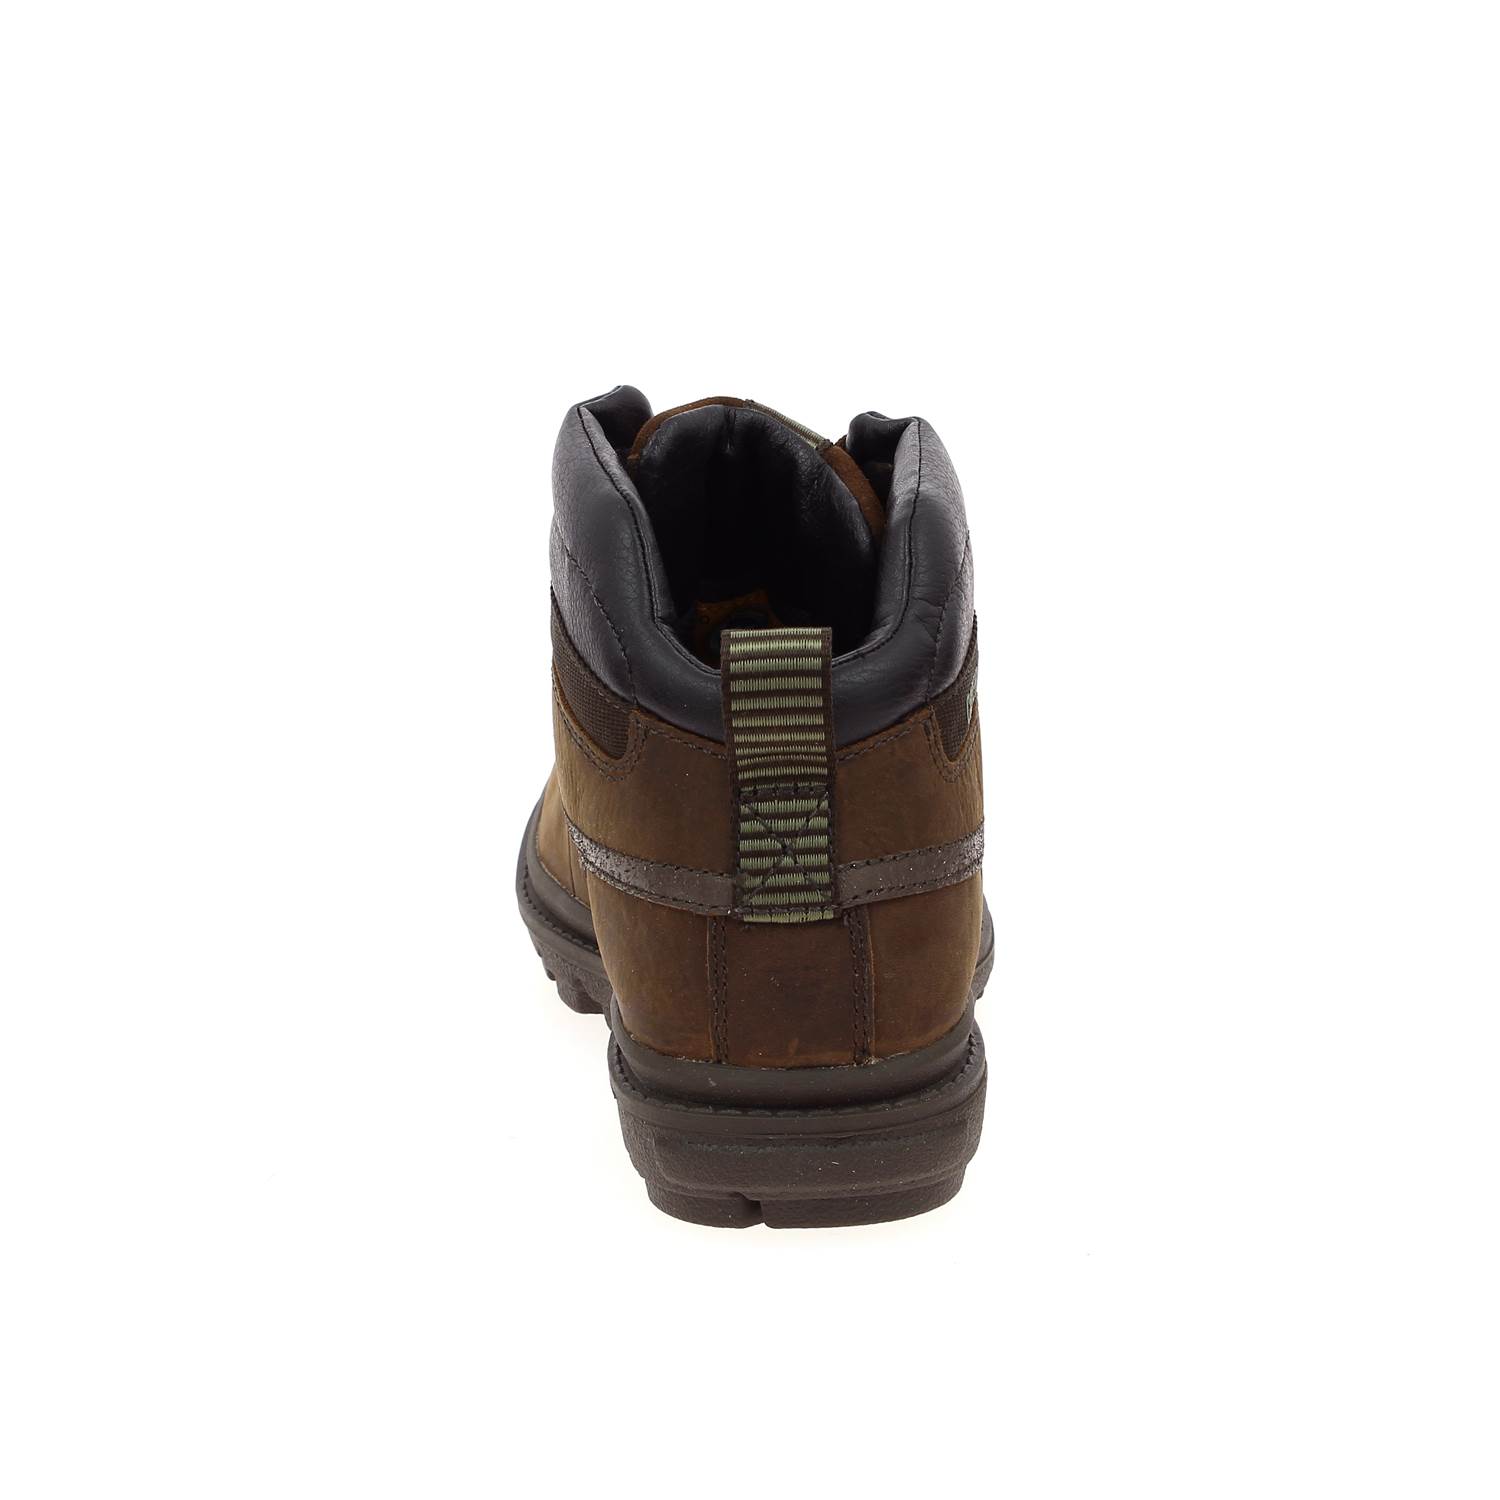 04 - GRADY - CATERPILLAR - Boots et bottines - Nubuck